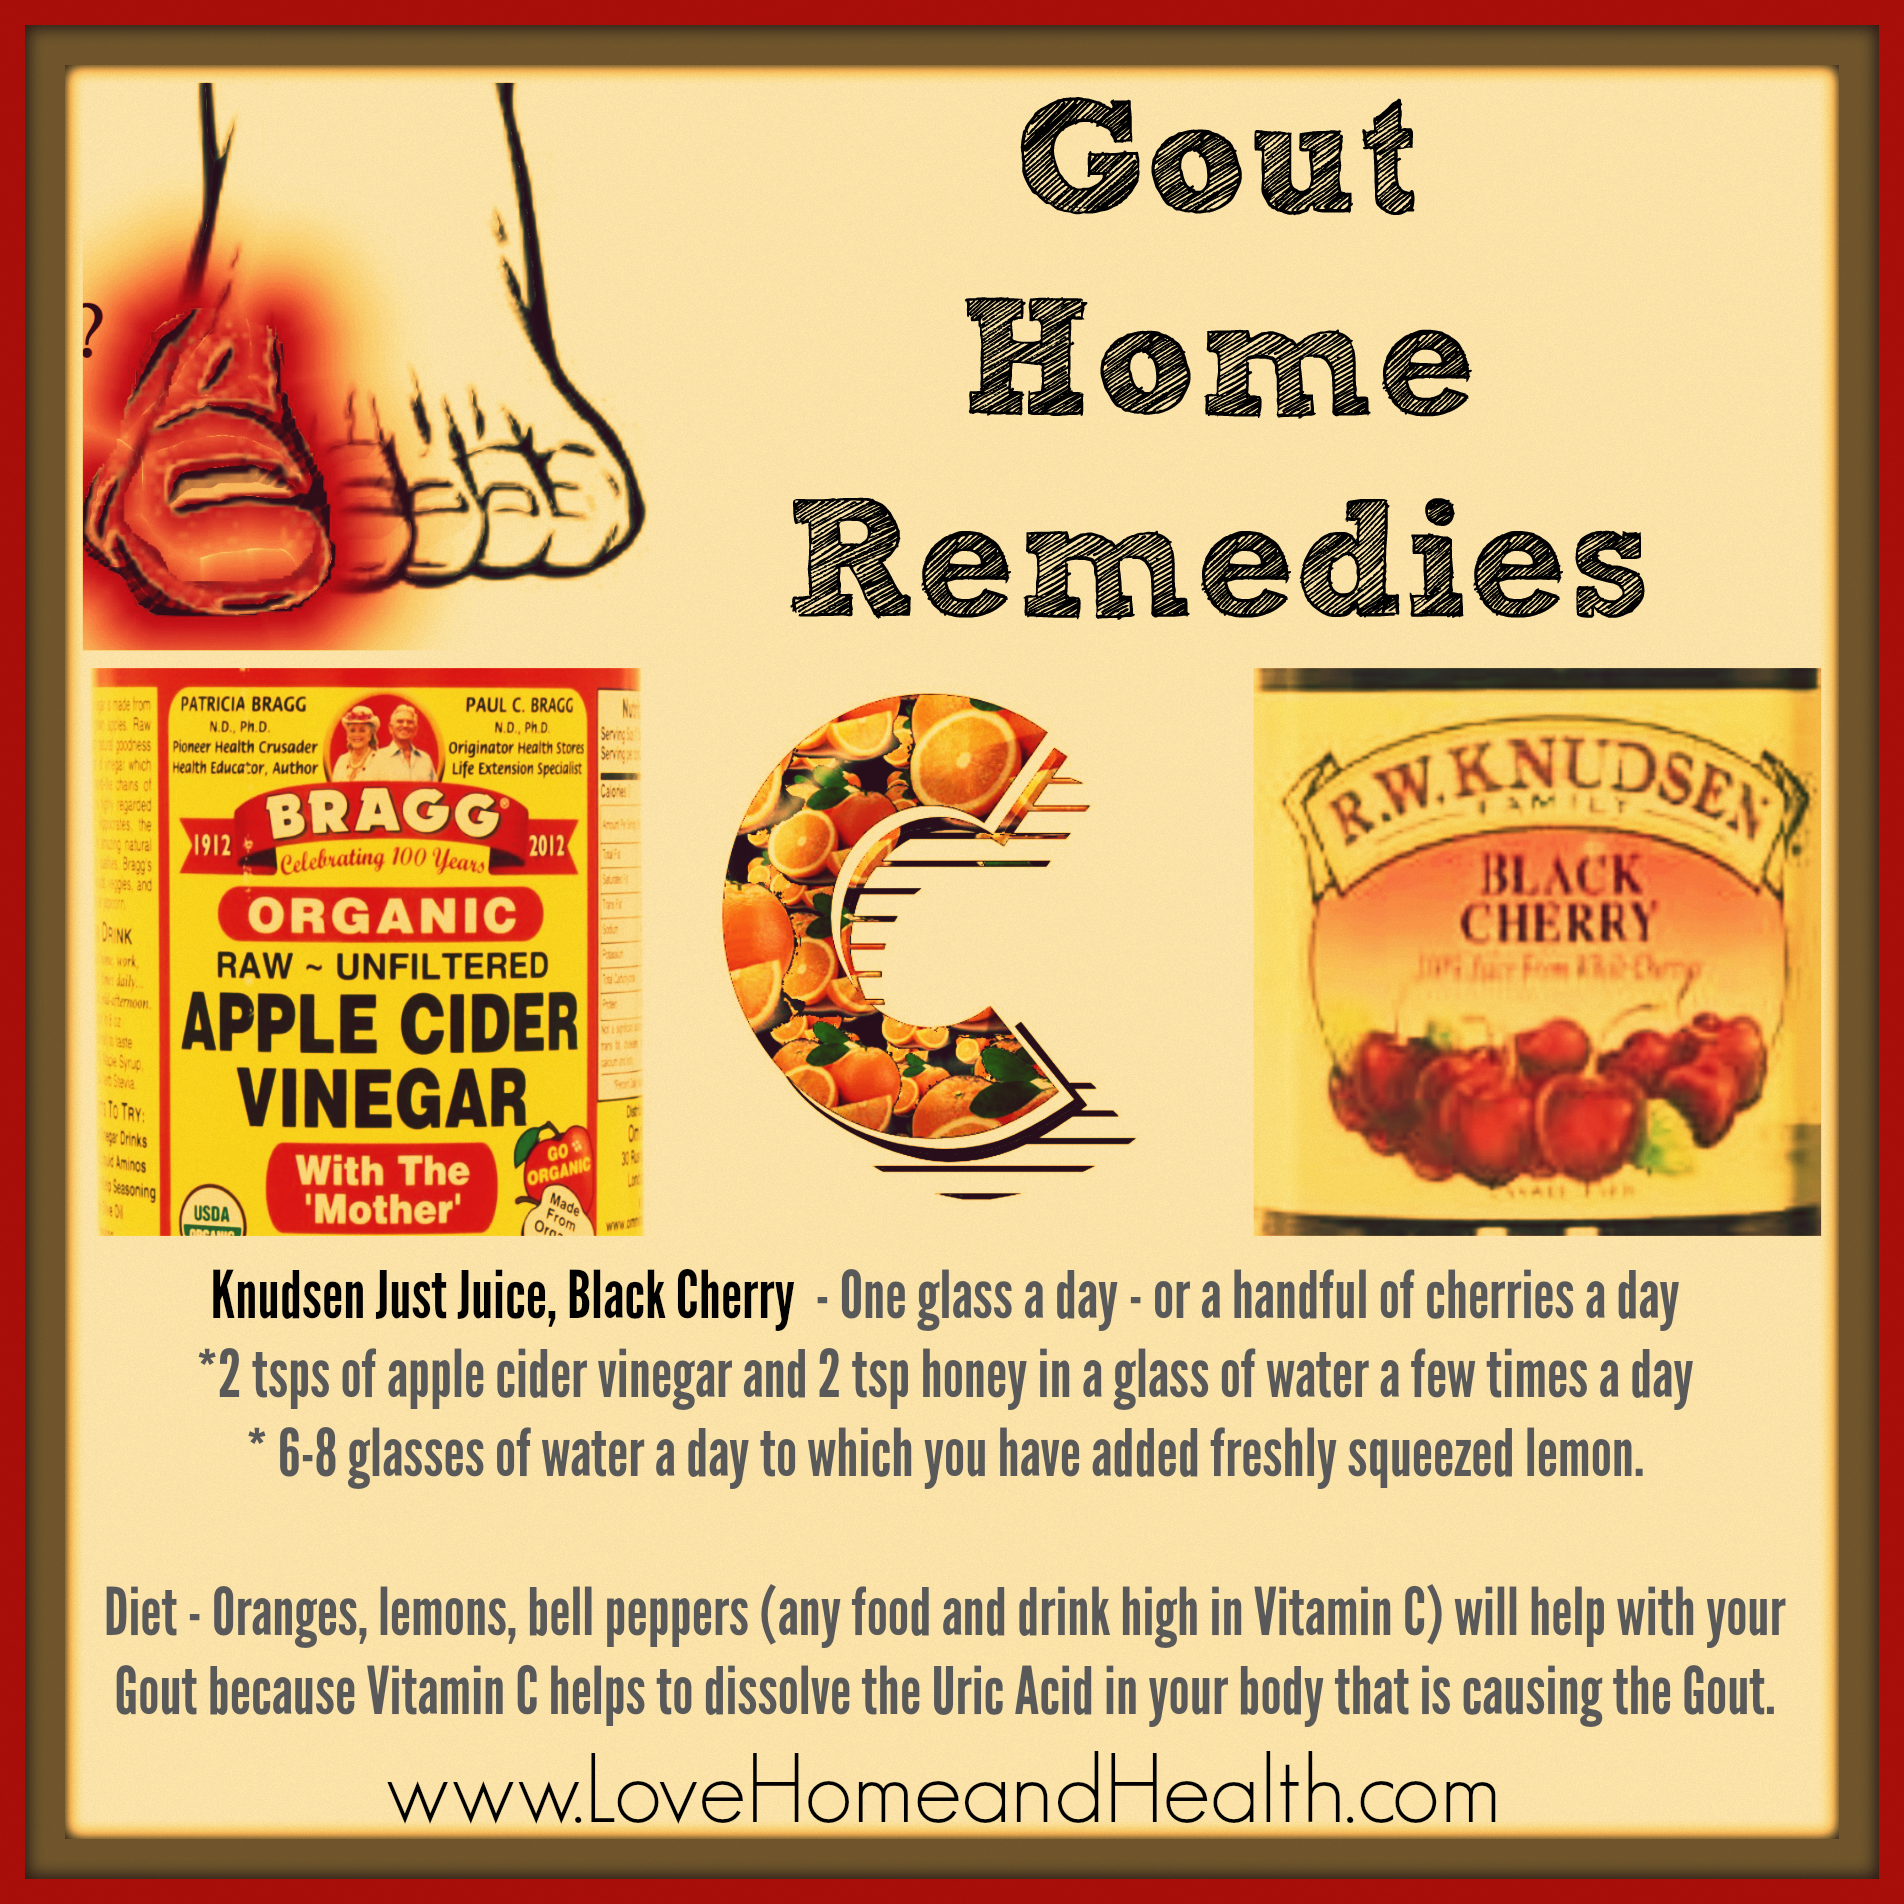 gout natural remedies